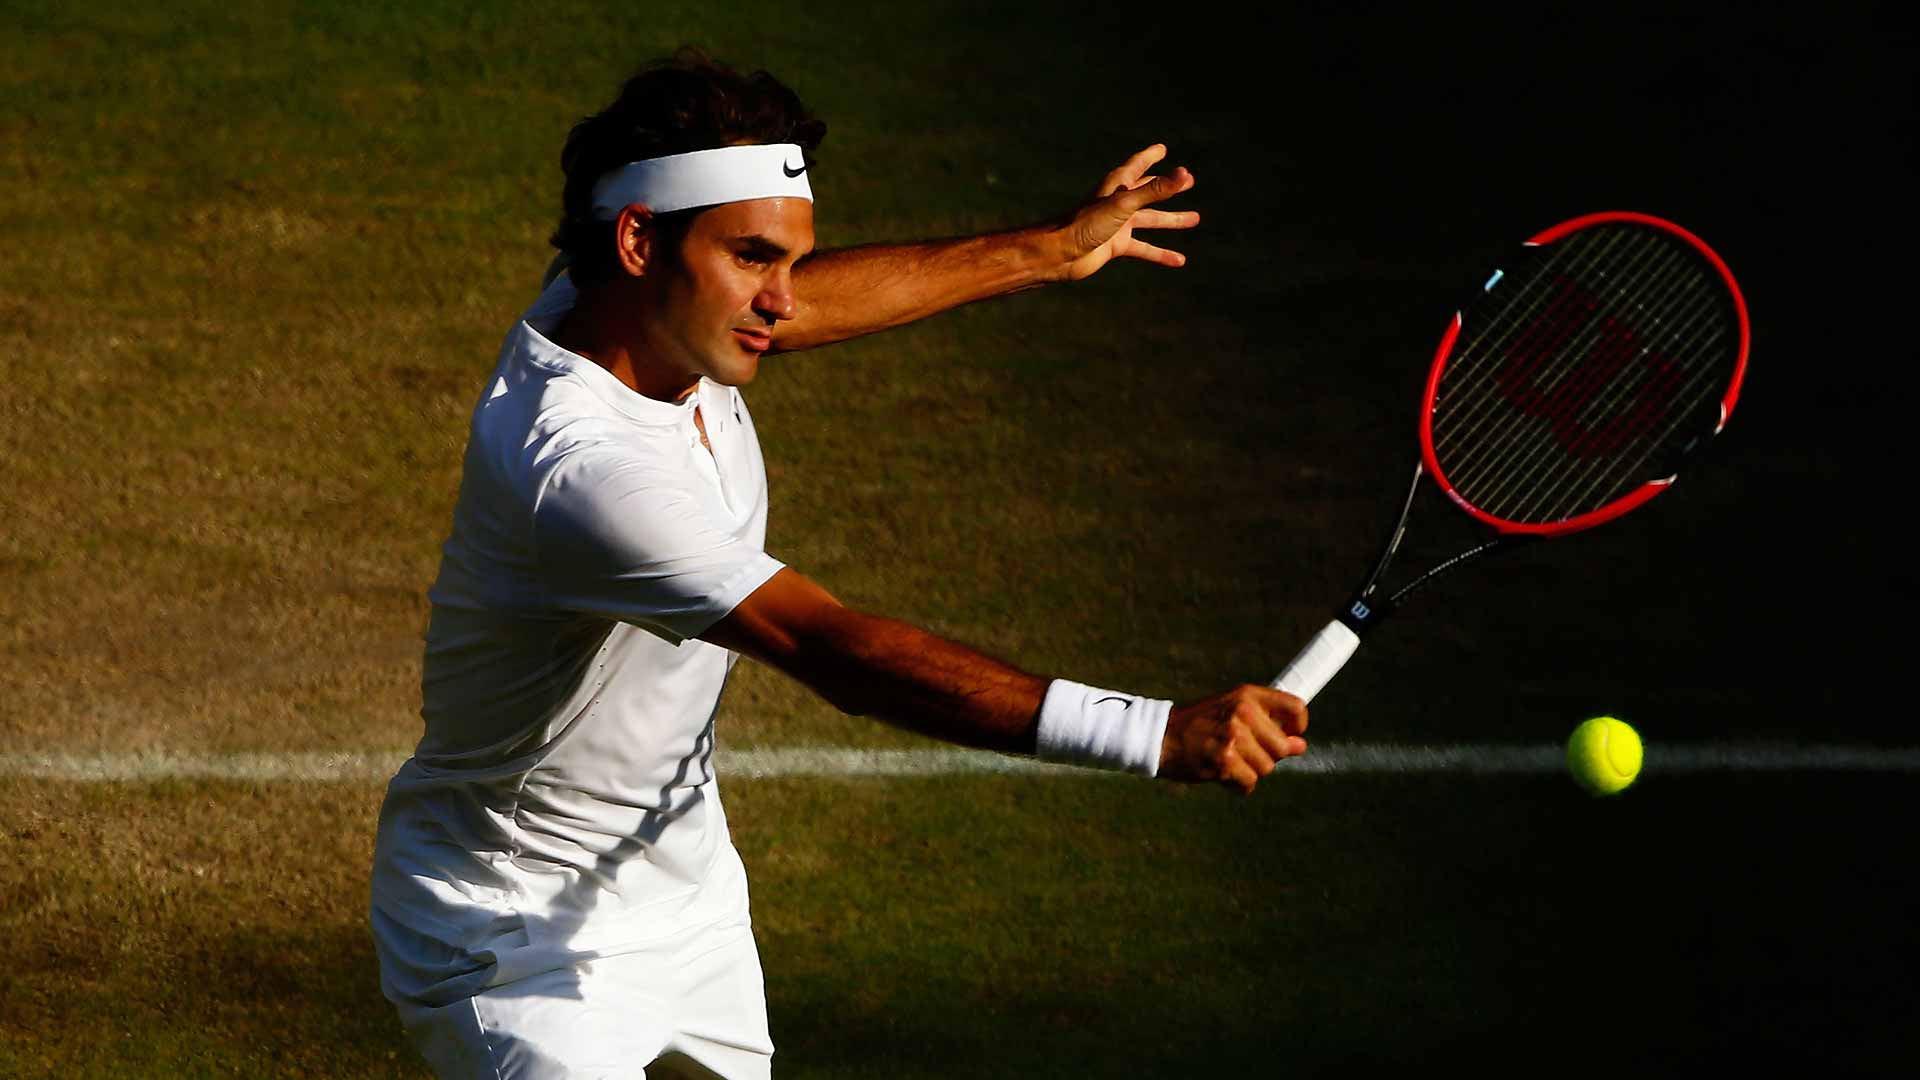 Wimbledon 2015 Monday2 Federer Bautista Agut Berdych Simon